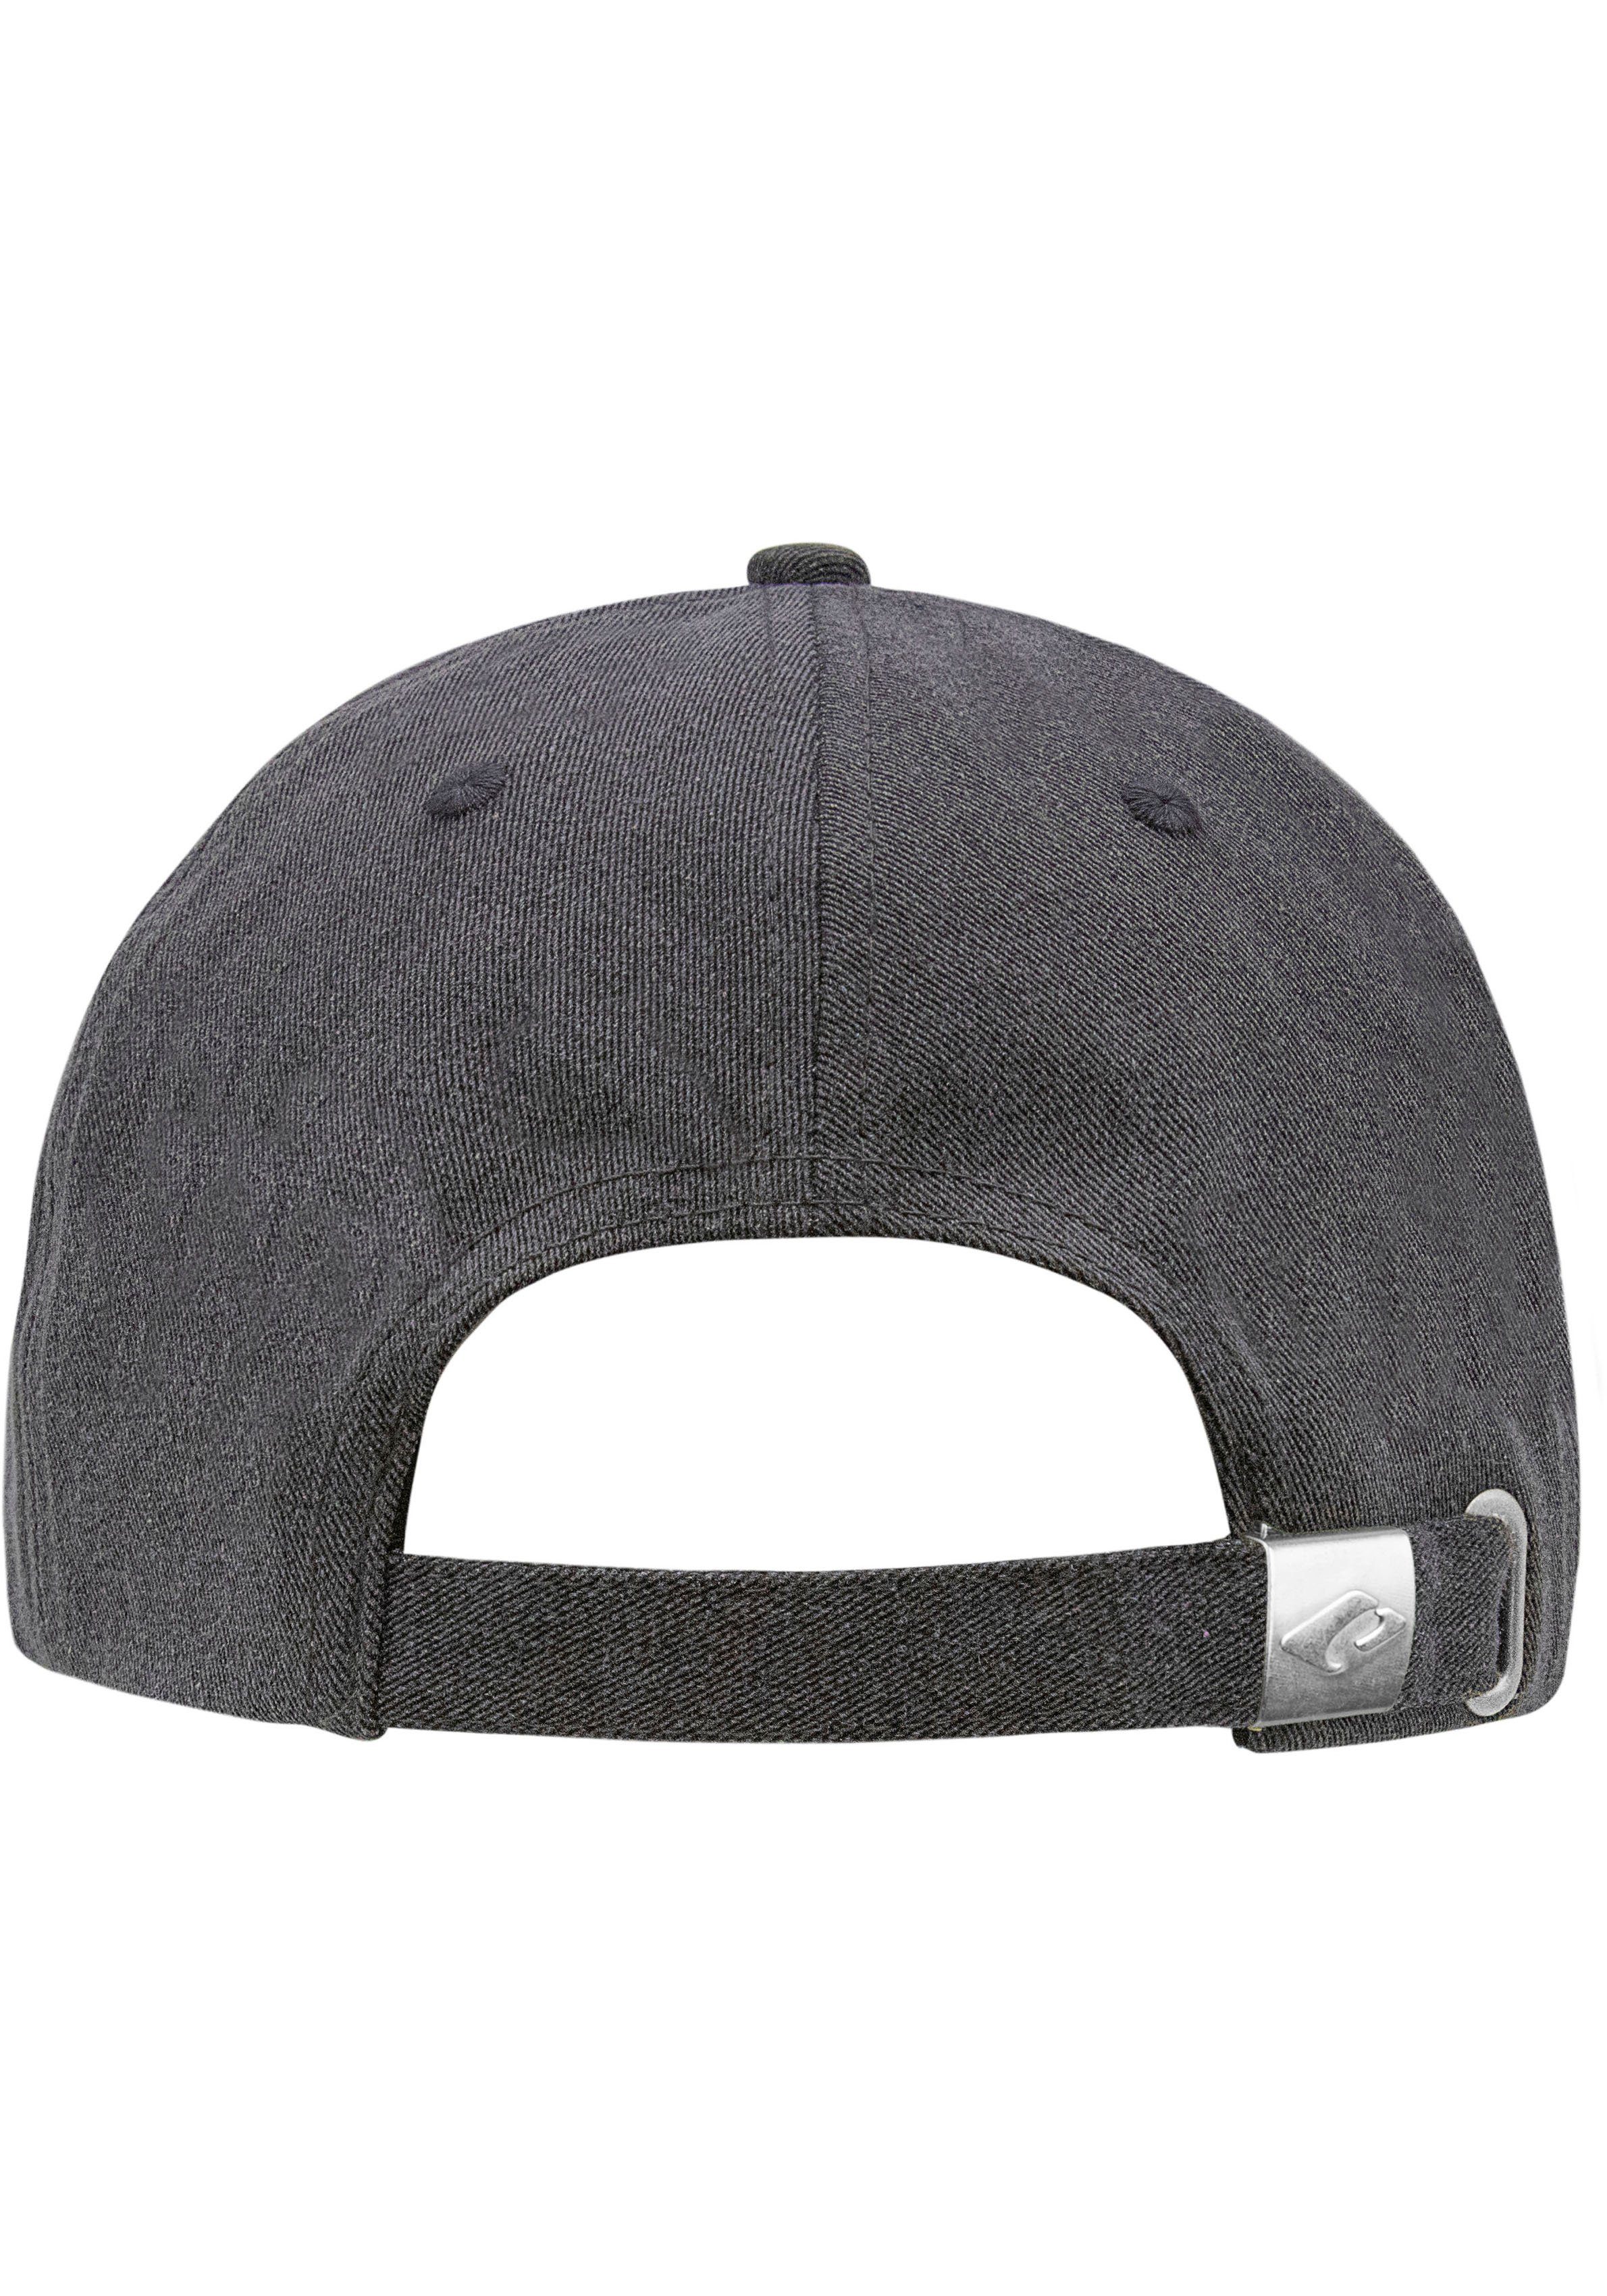 chillouts Baseball Cap Arklow Hat dunkelgrau